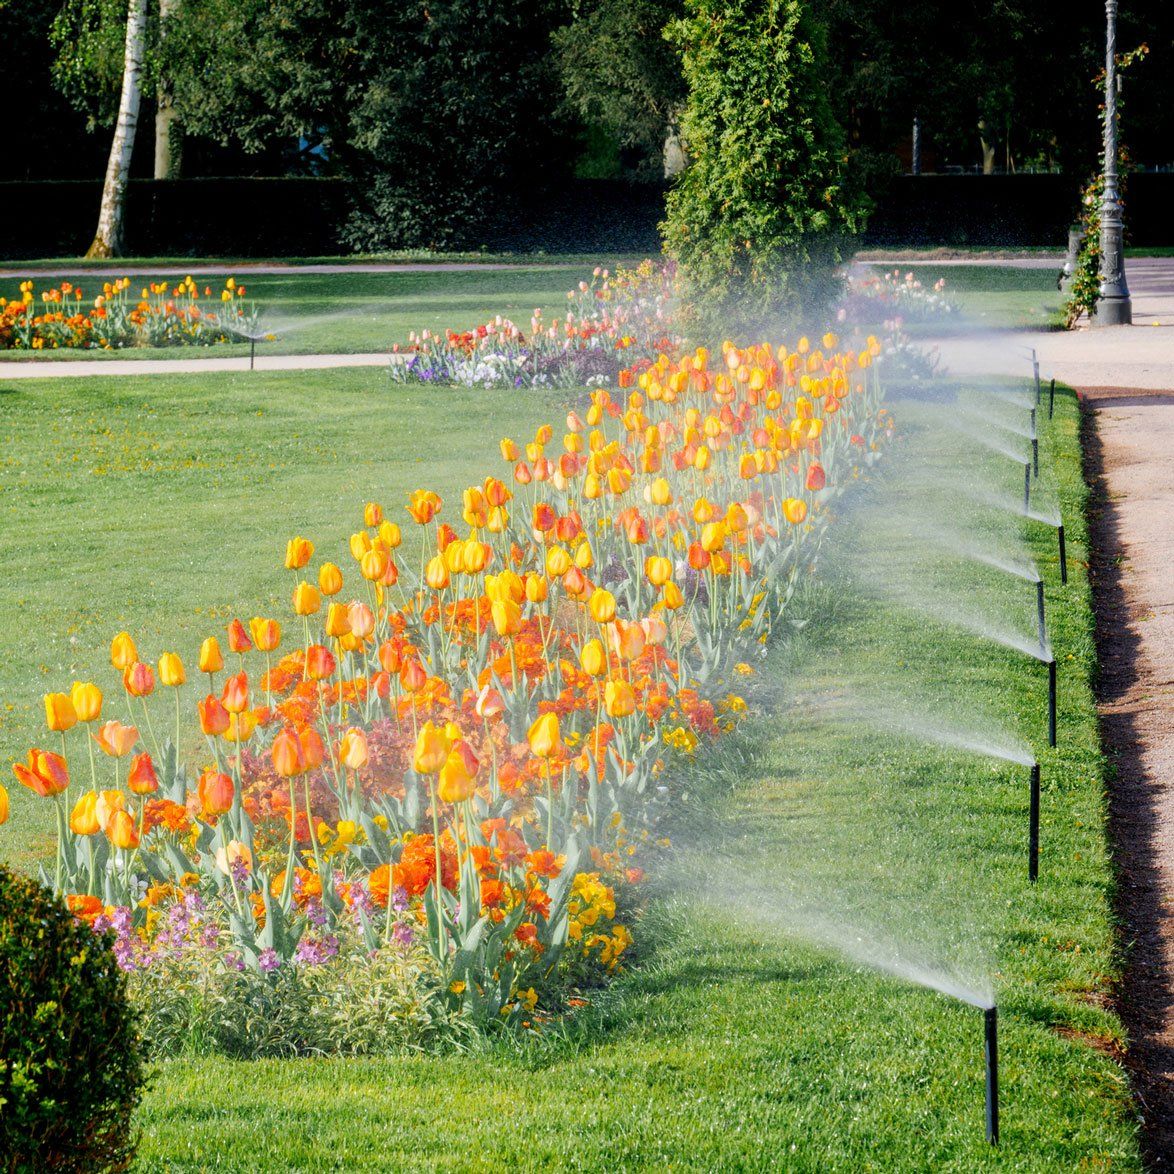 Professional Sprinkler Services — Morning Garden Park With Sprinkler in Colorado Springs, CO